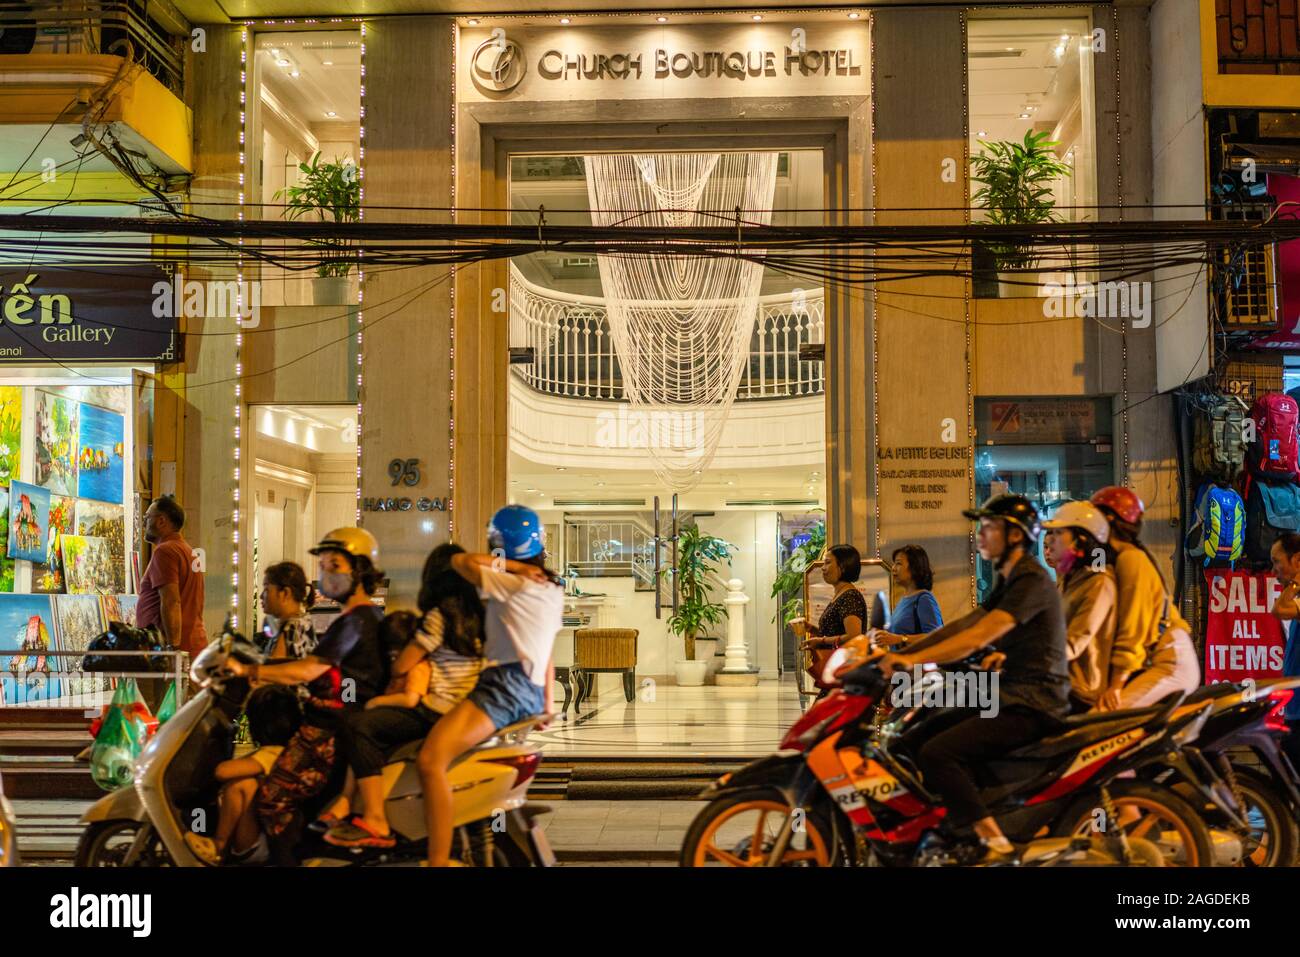 HANOI, VIETNAM - Oct 22, 2019: A group of people riding cool motorcycles in Hanoi, Vietnam Stock Photo